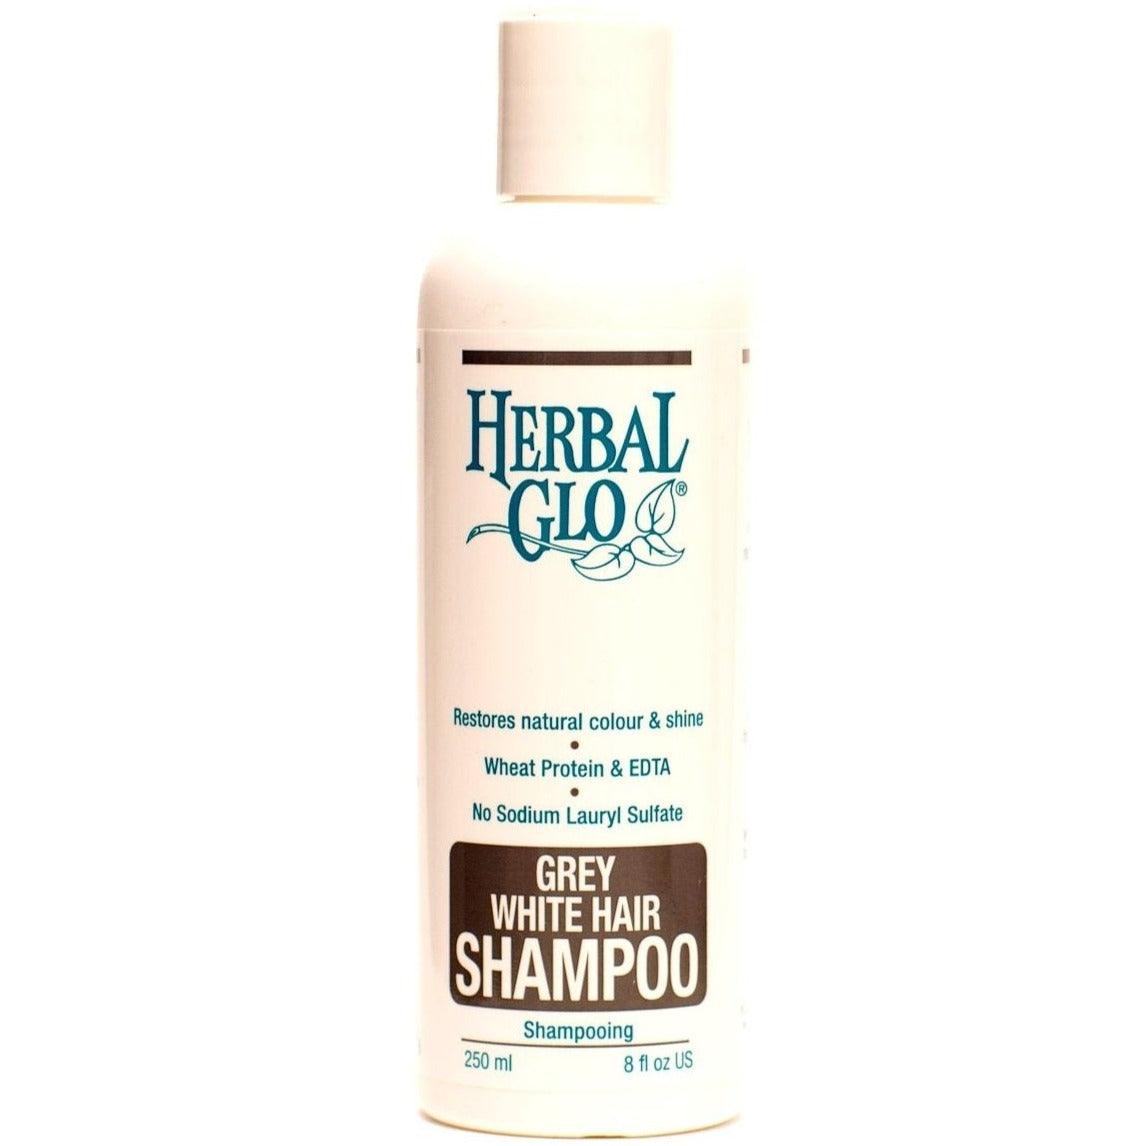 Herbal Glo Shampoo Grey & White Hair 250mL Shampoo at Village Vitamin Store